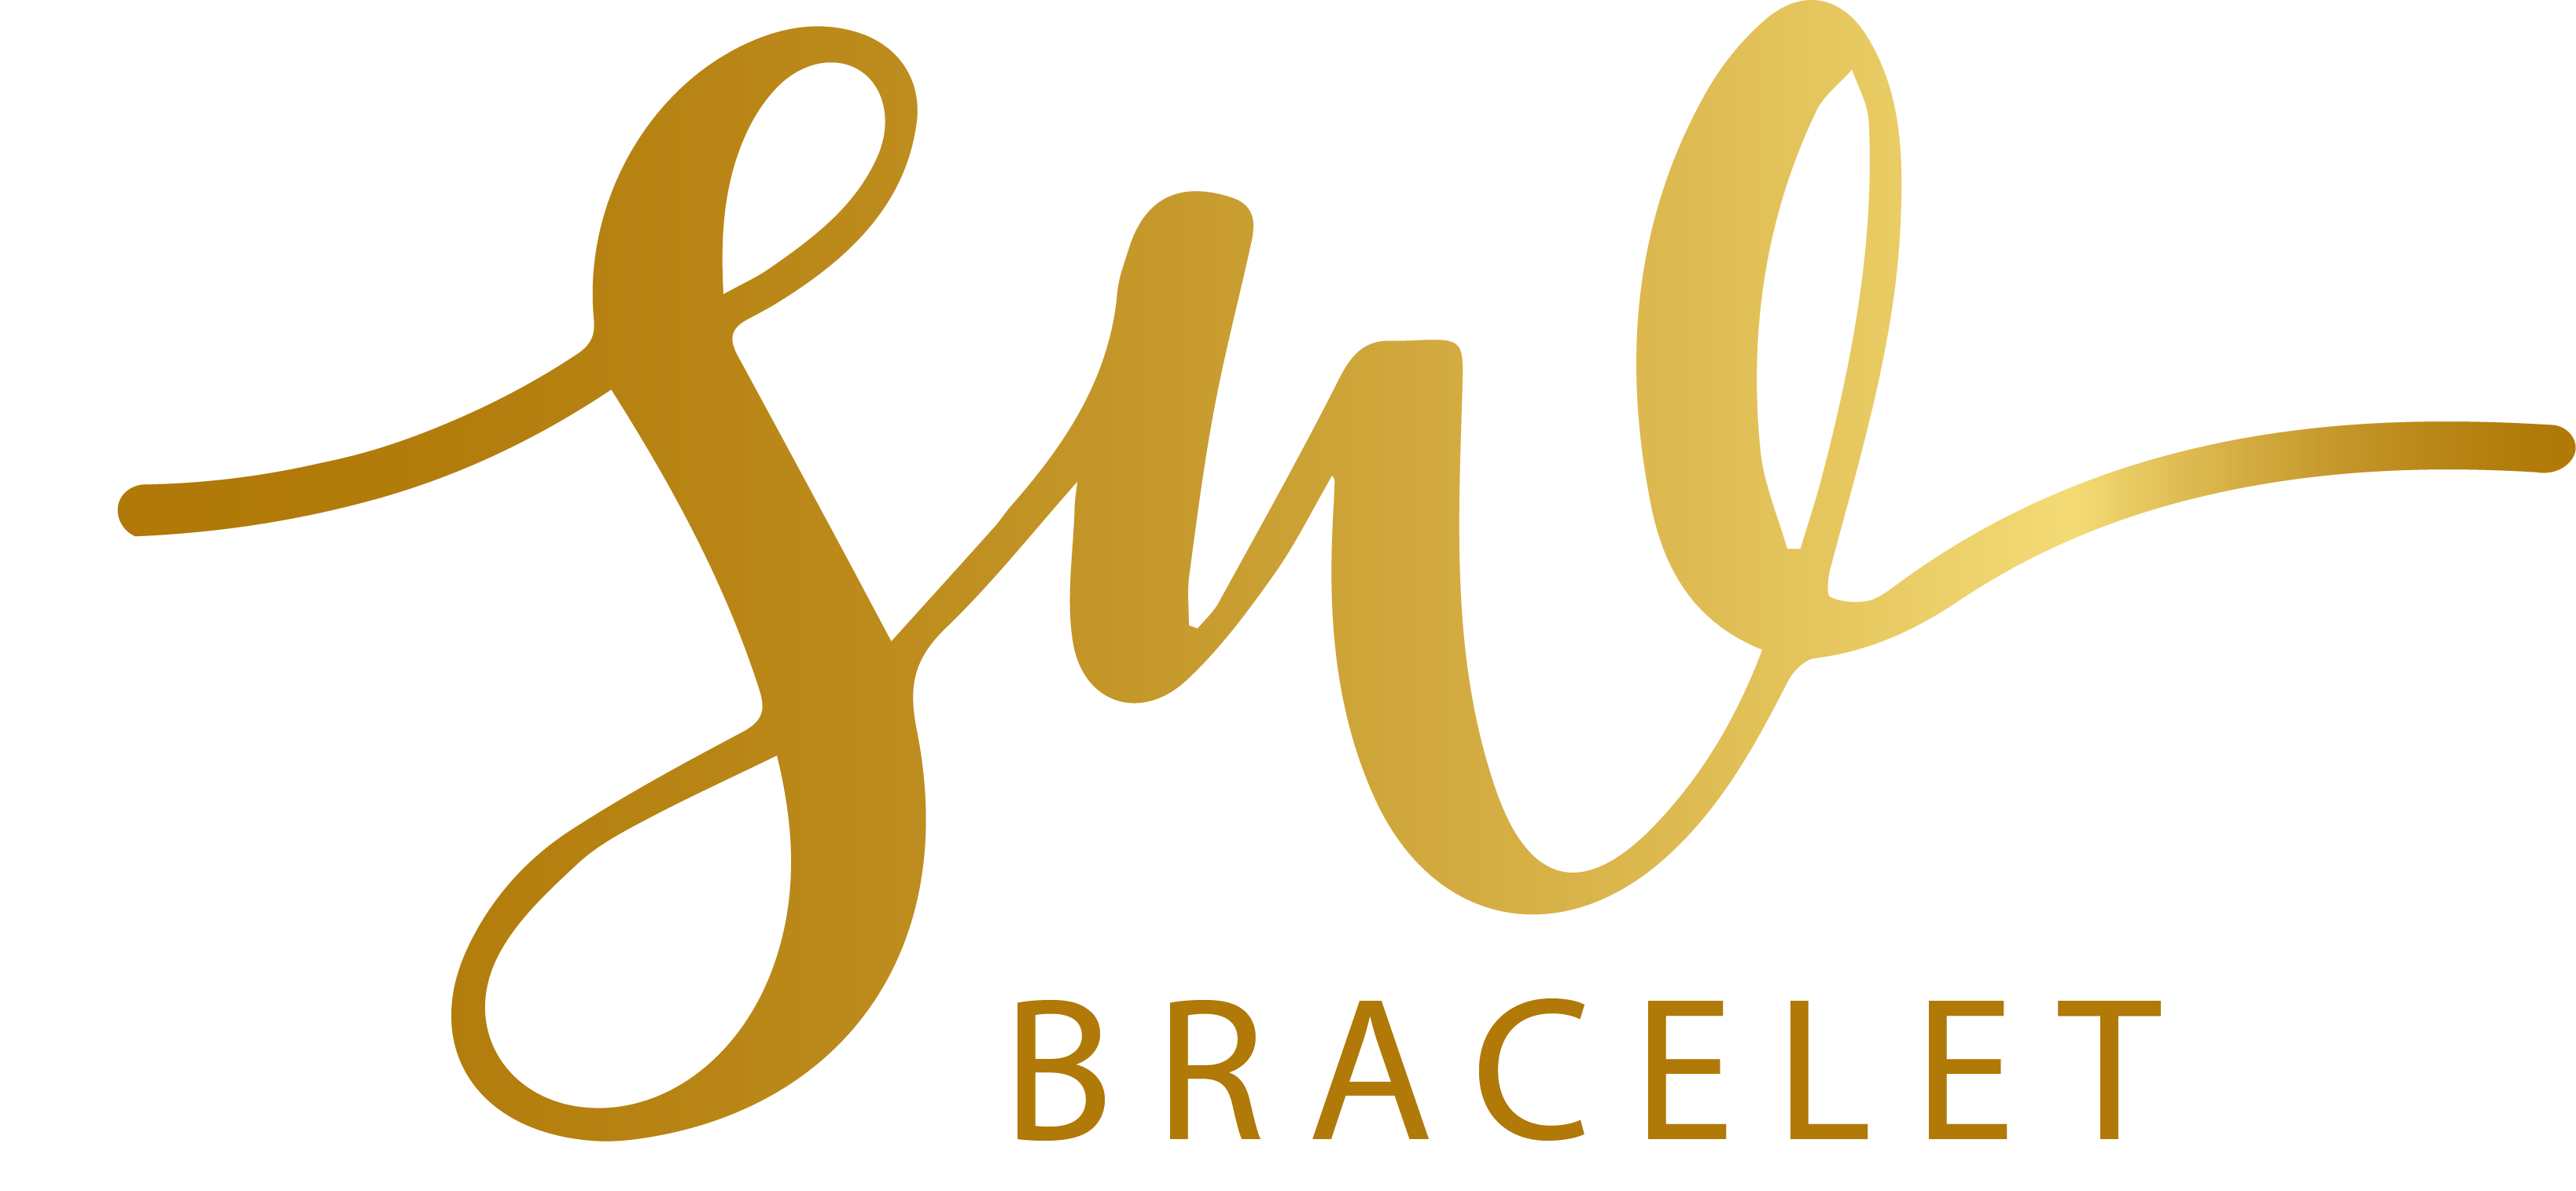 Sue's Bracelet